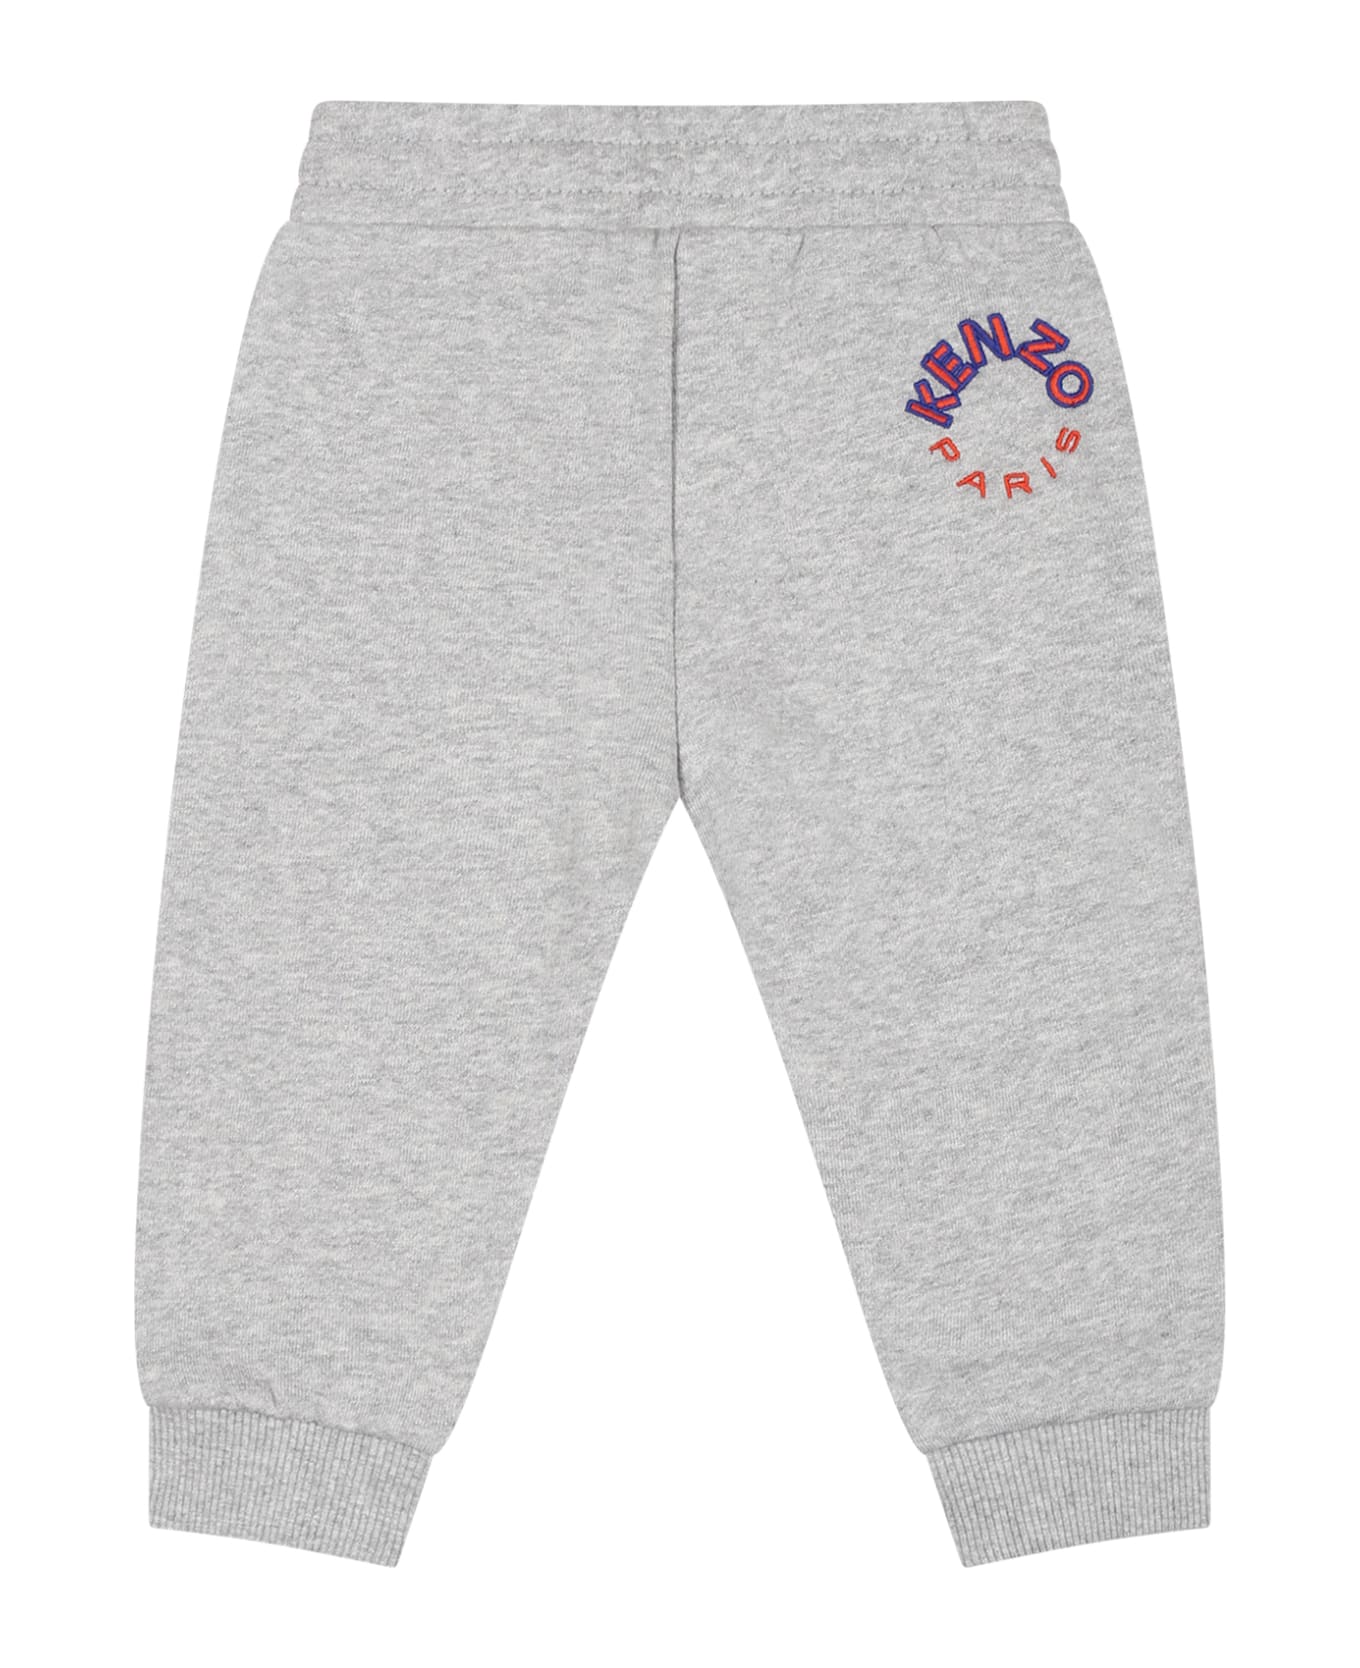 Kenzo Kids Grey Trousers For Baby Boy With Logo - Grey